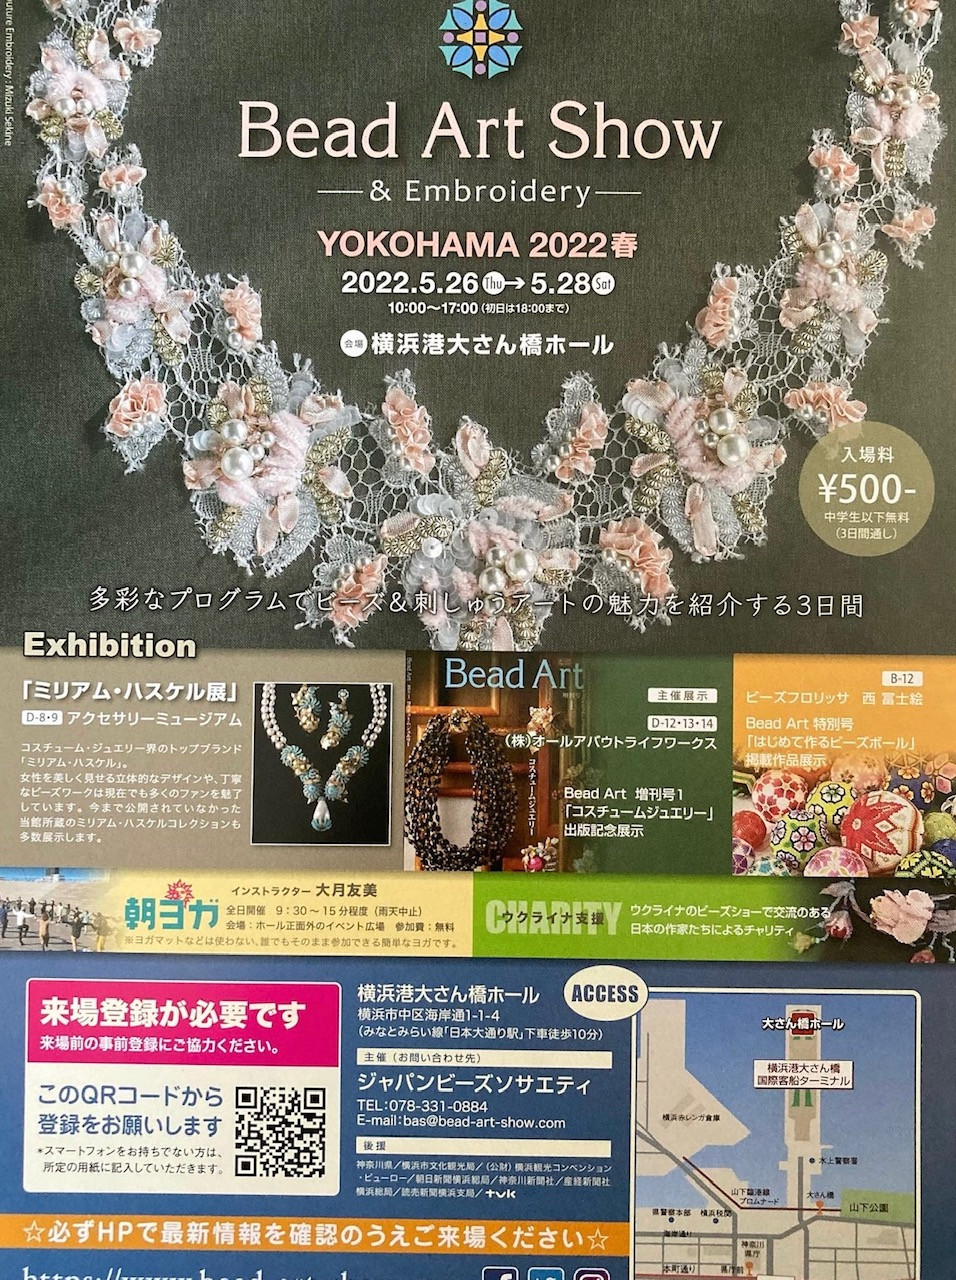 Bead Art Show Yokohama